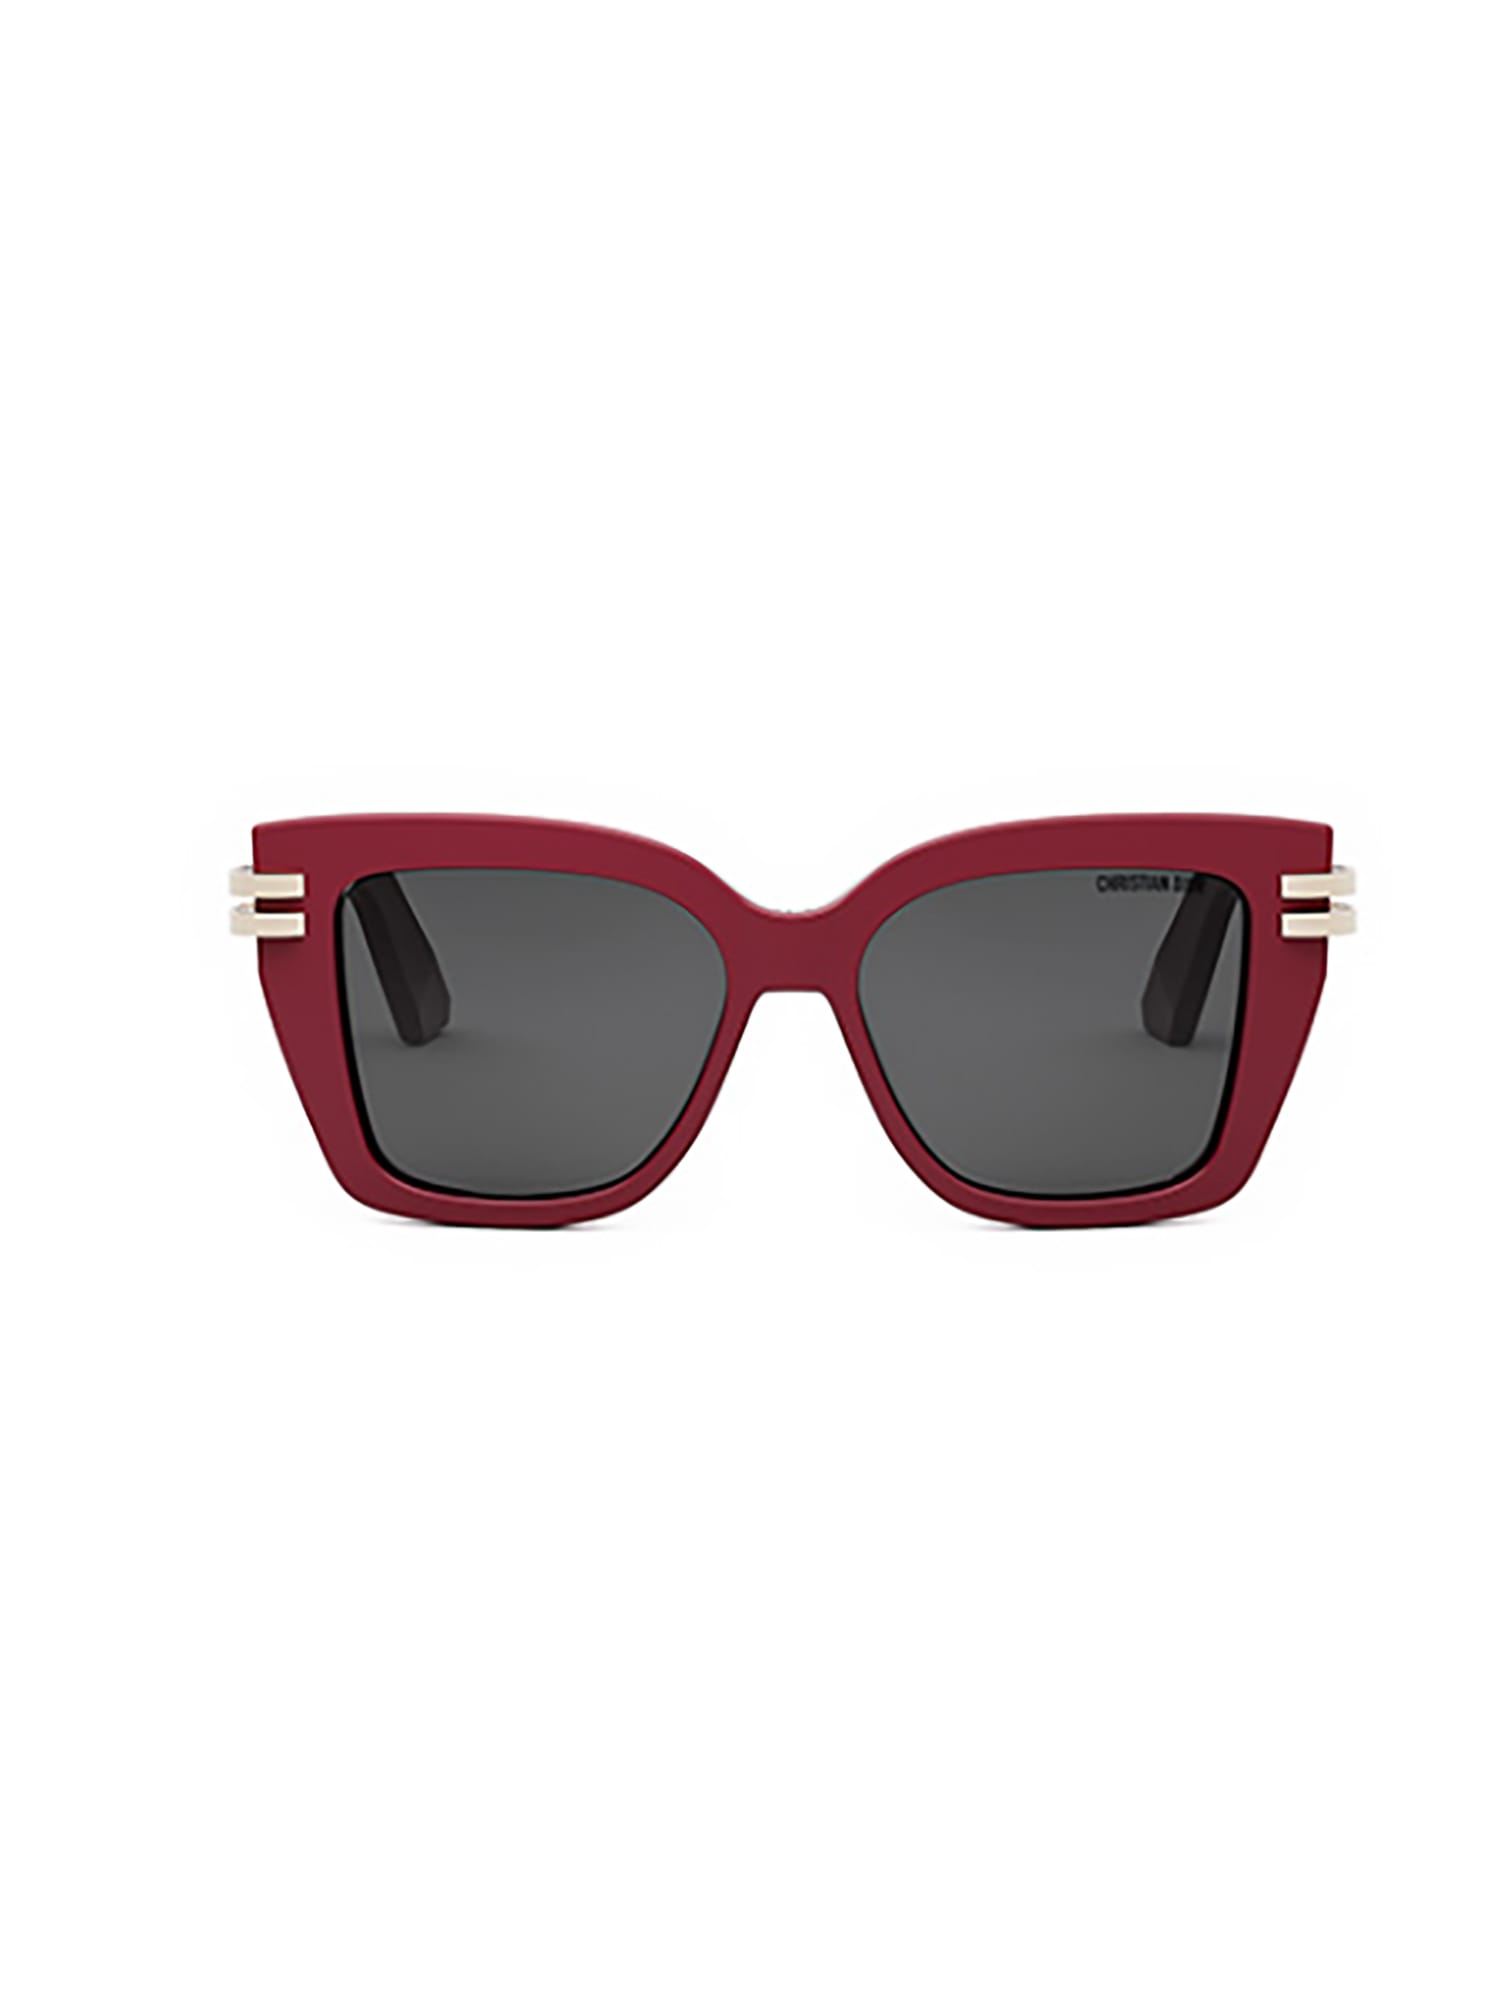 Dior C S1i Sunglasses In Burgundy